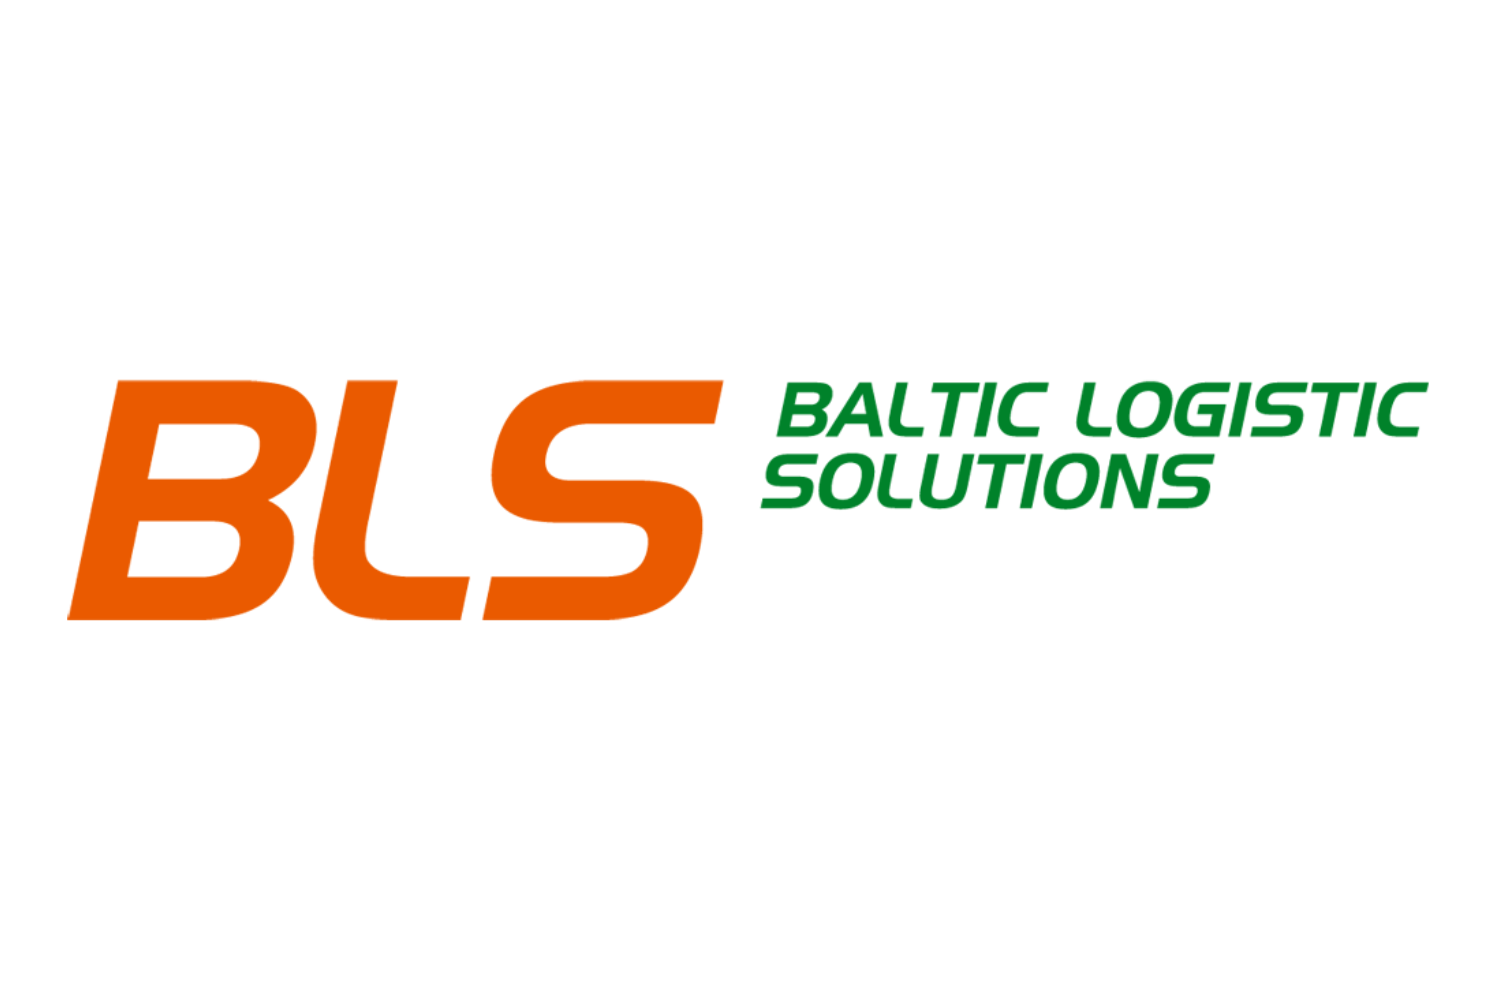 Baltic logistic solutions BLS - Mafija tamsoje klientai